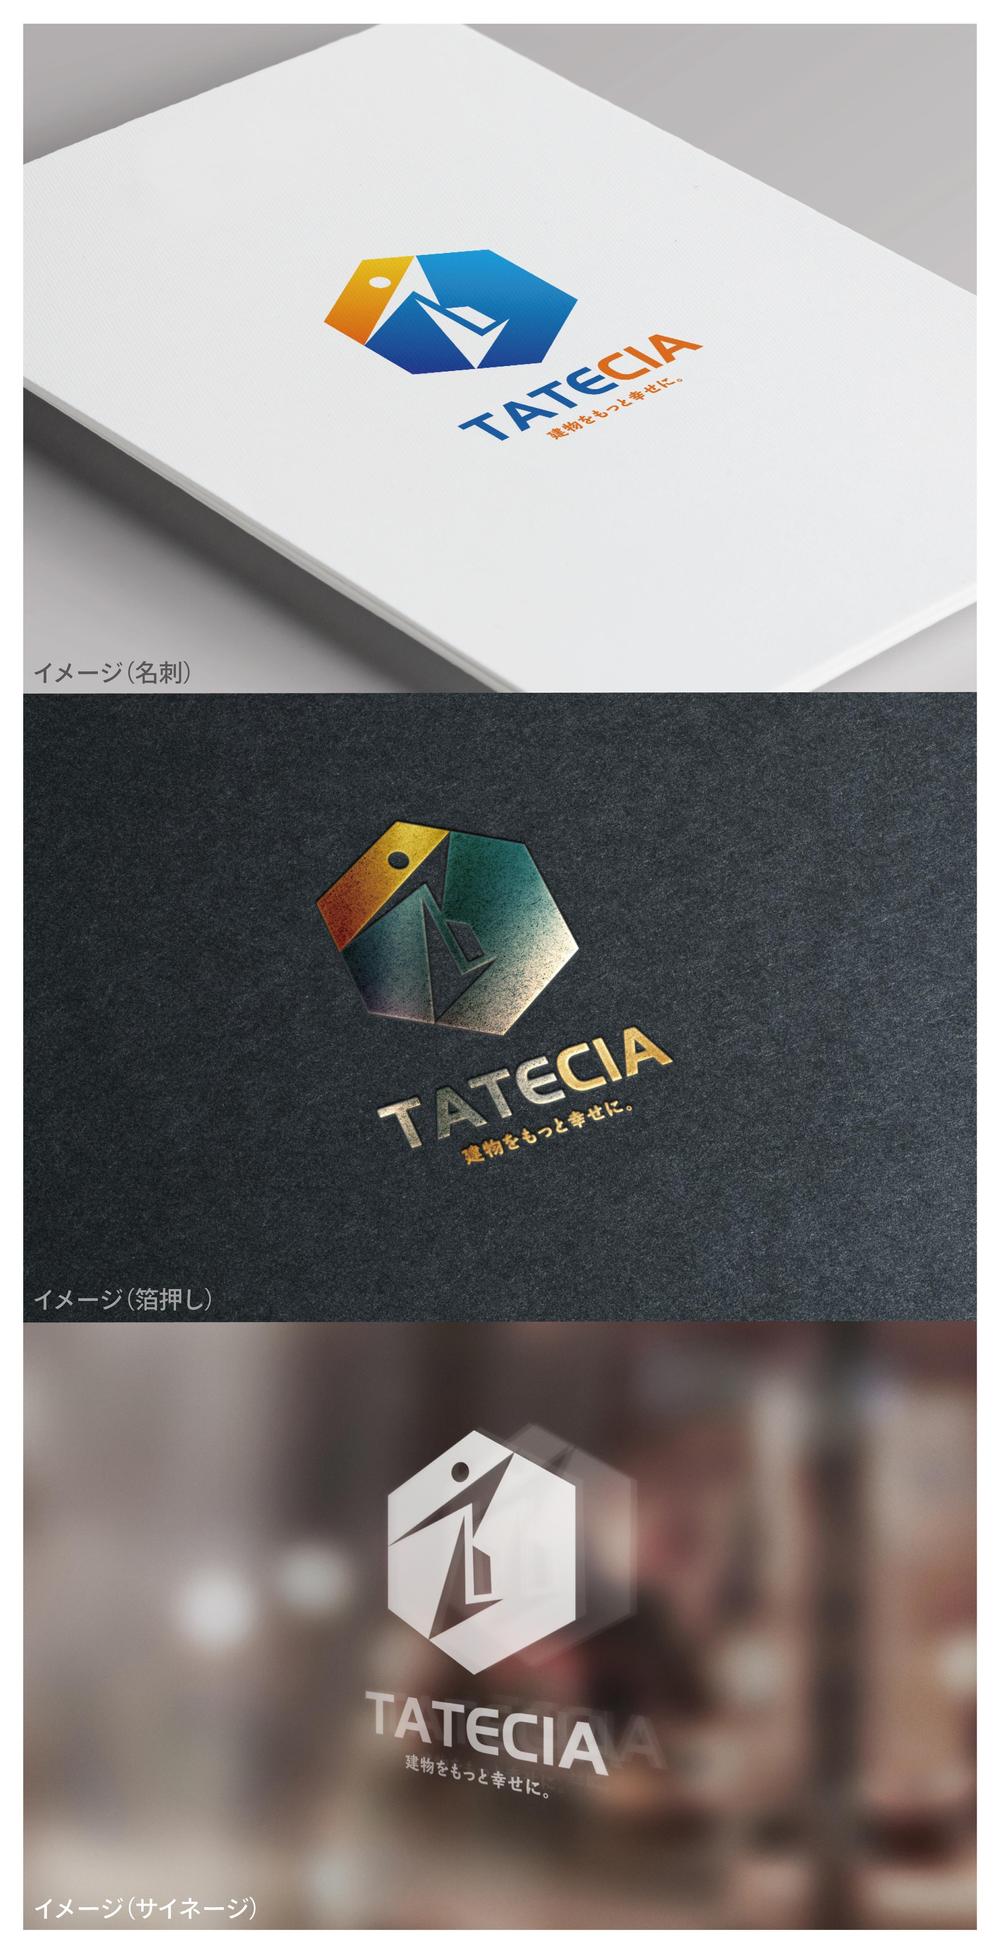 TATECIA_logo02_01.jpg